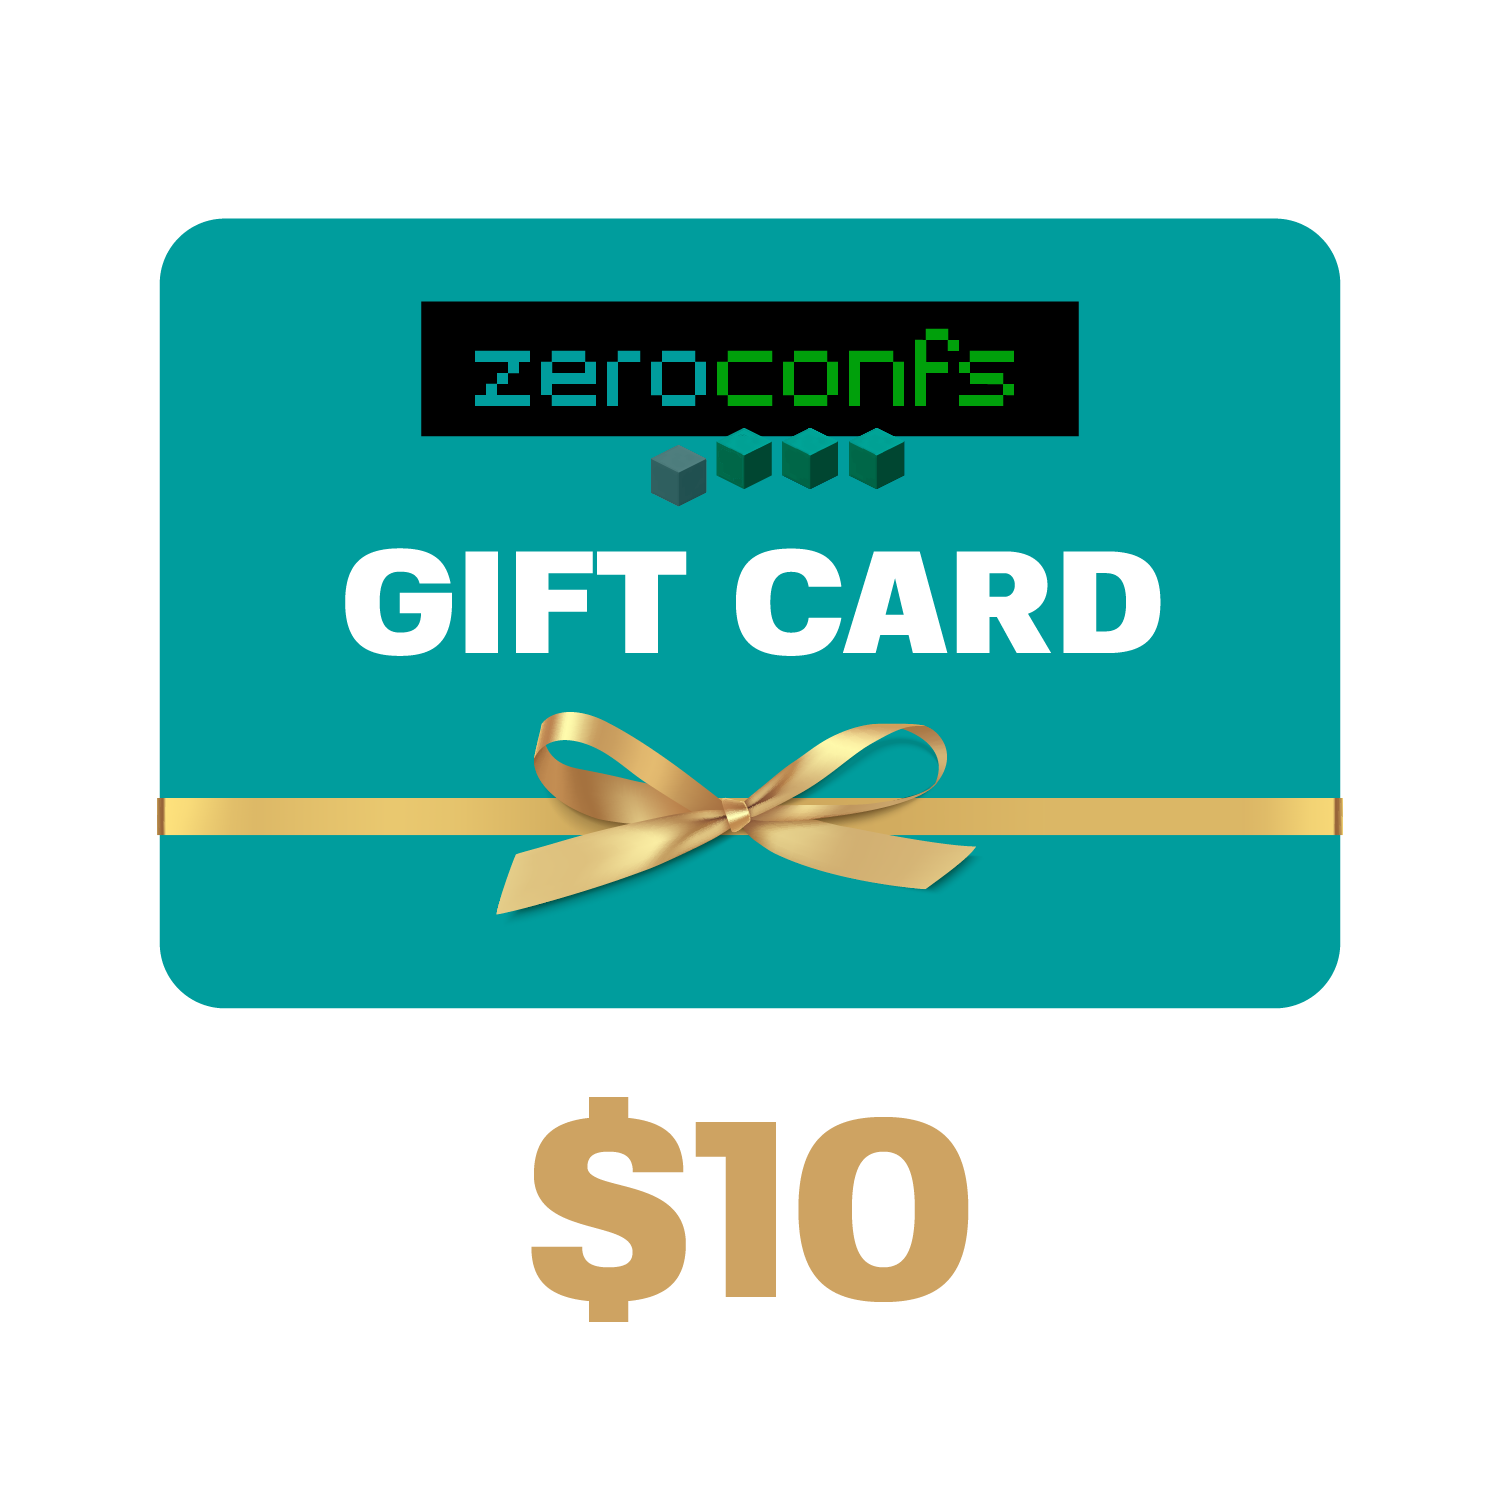 Gift Card Gift Cards zeroconfs $10 USD  